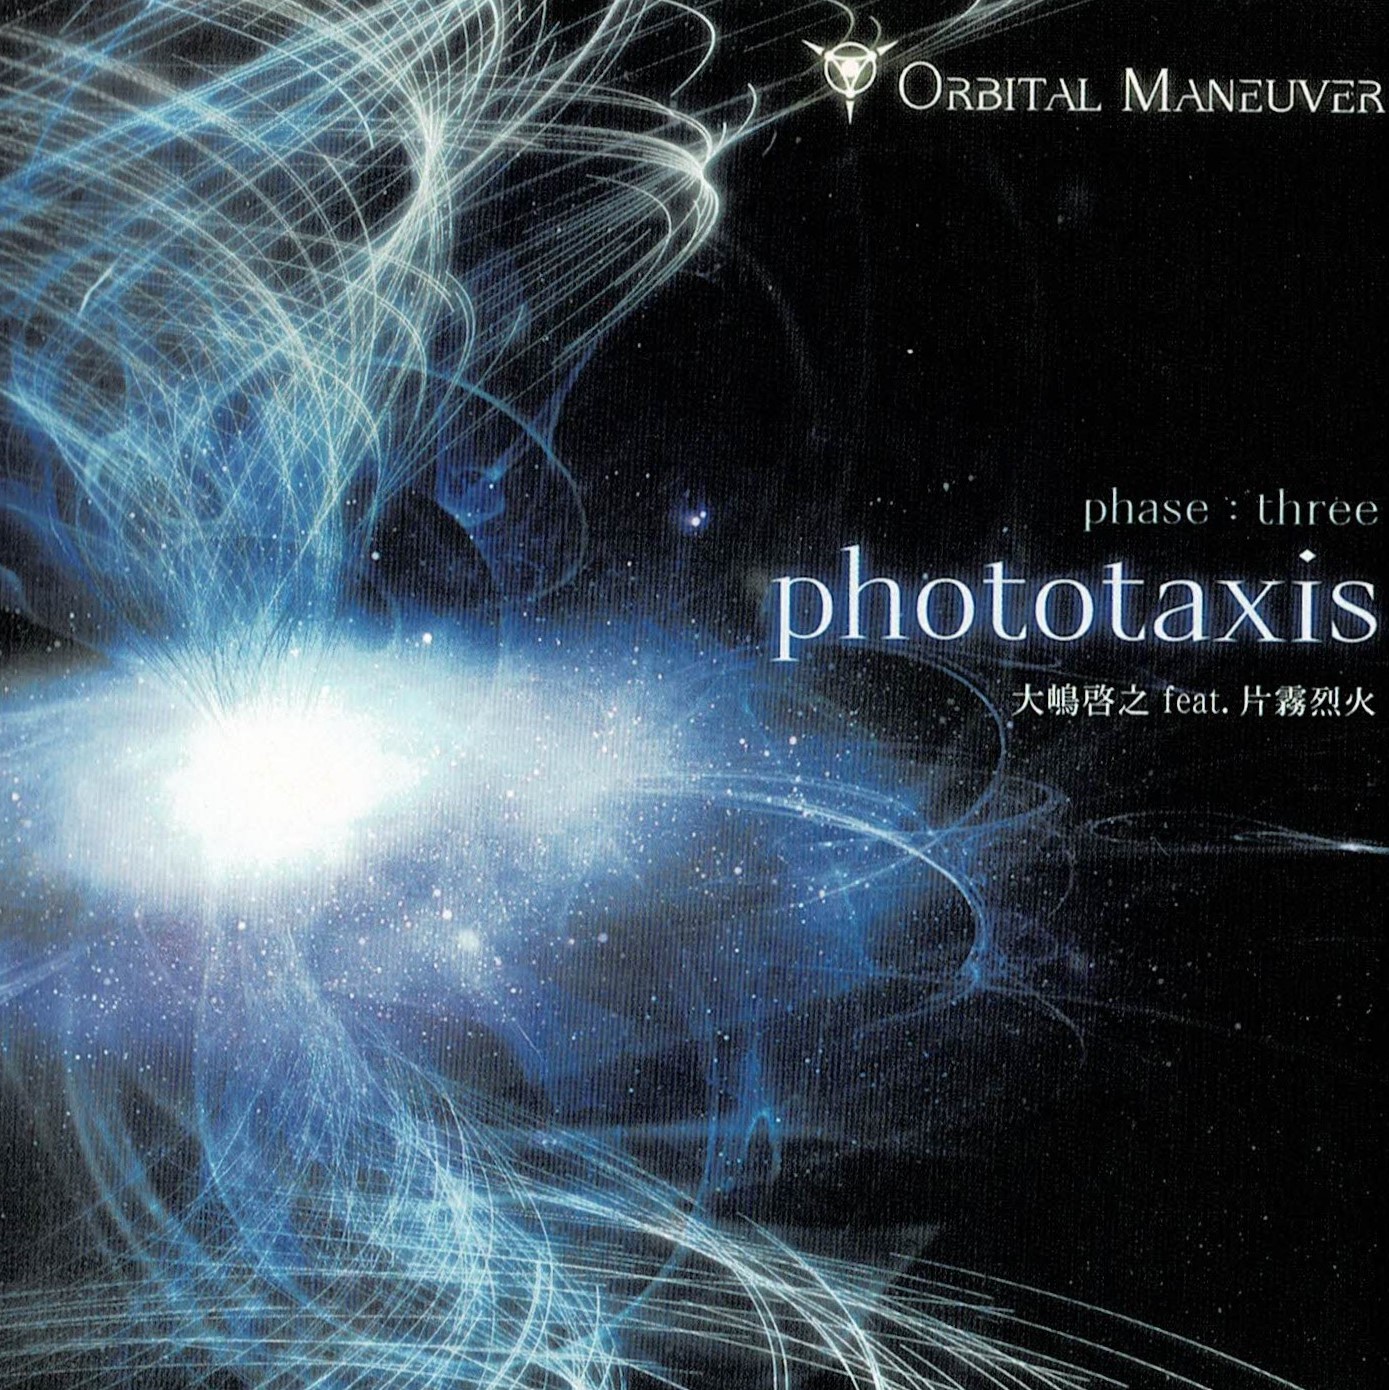 『ORBITAL MANEUVER phase three: phototaxis』の画像